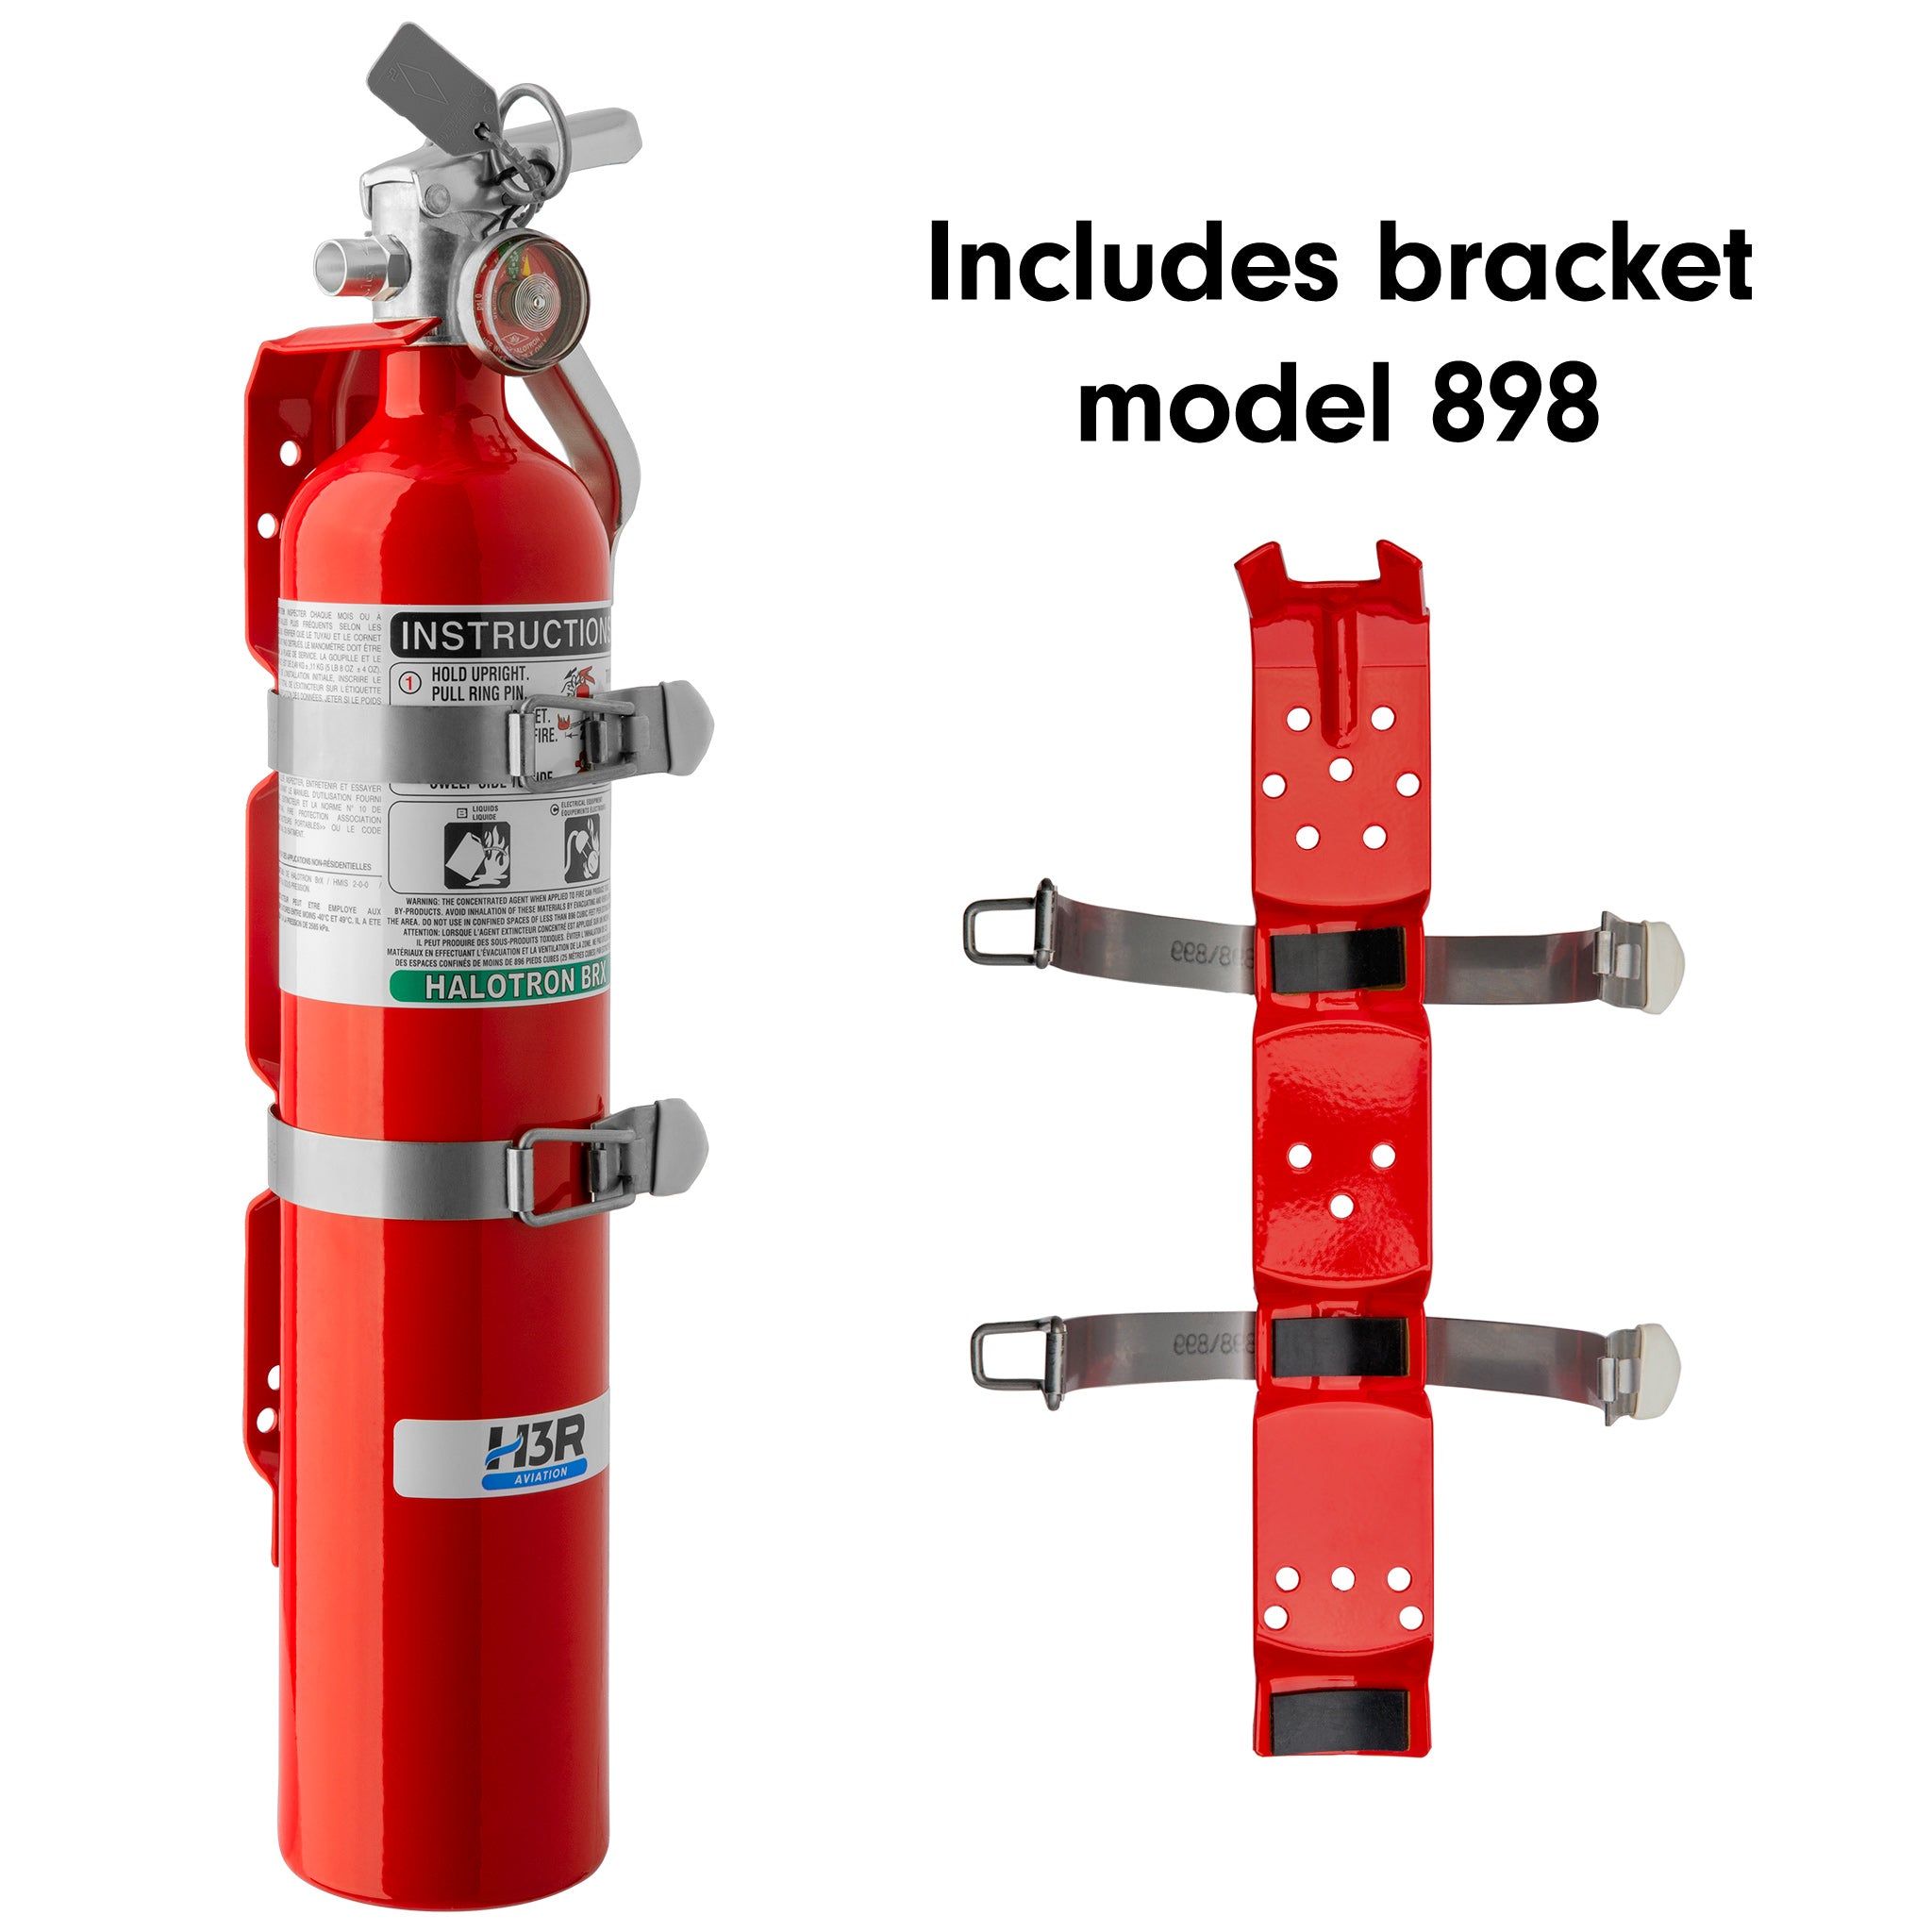 347TS - 3.75 lb. Halotron BrX Fire Extinguisher